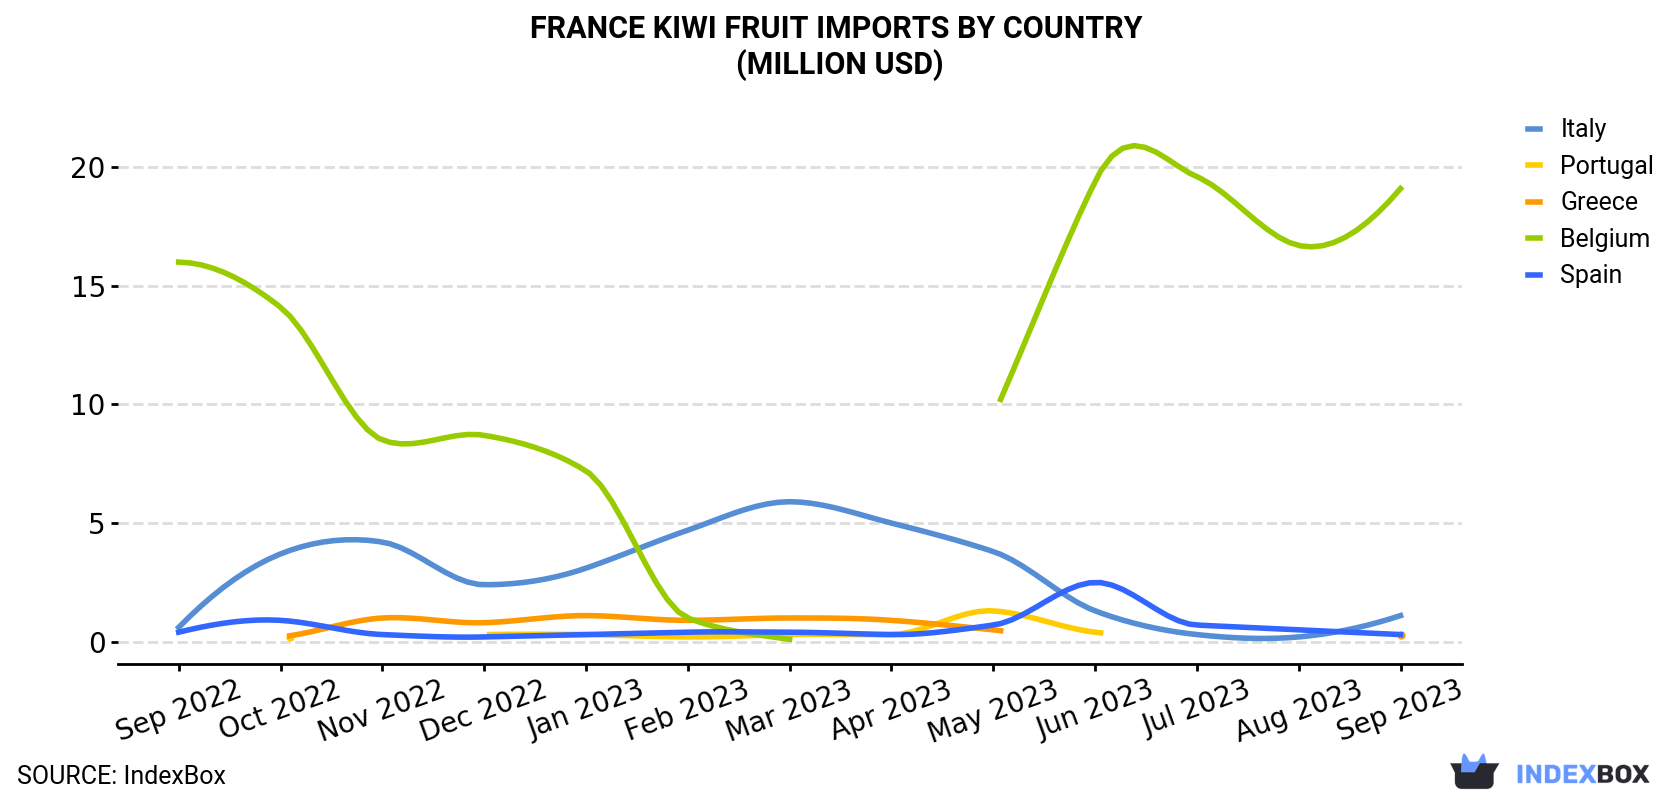 France Kiwi Fruit Imports By Country (Million USD)